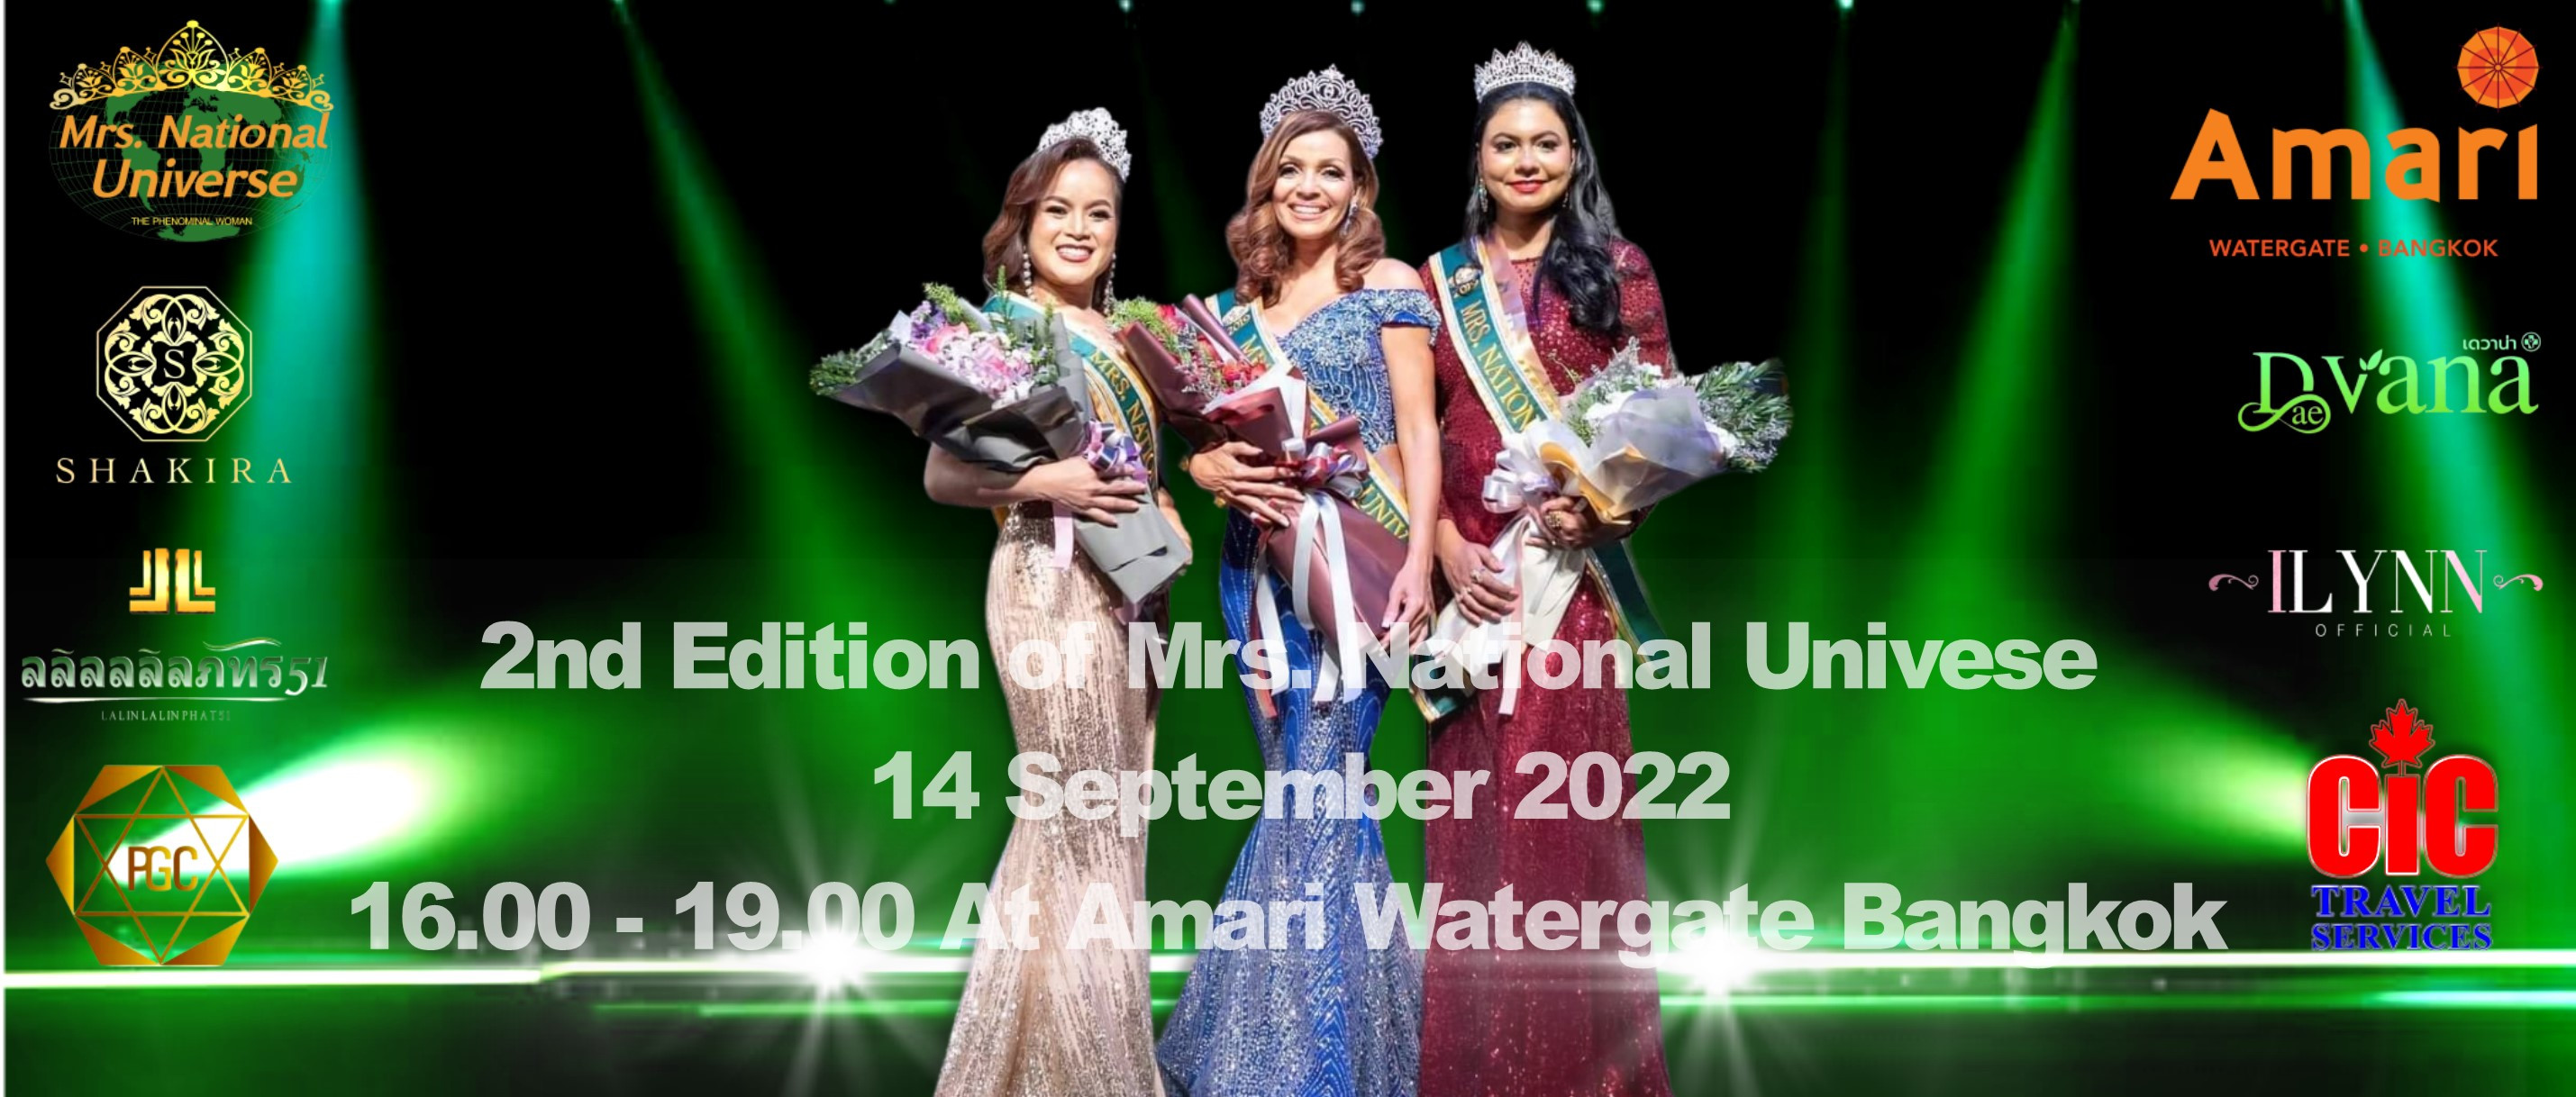 candidatas a mrs. national universe 2022. final: 14 sep. sede: thailand. - Página 2 PjxTQI